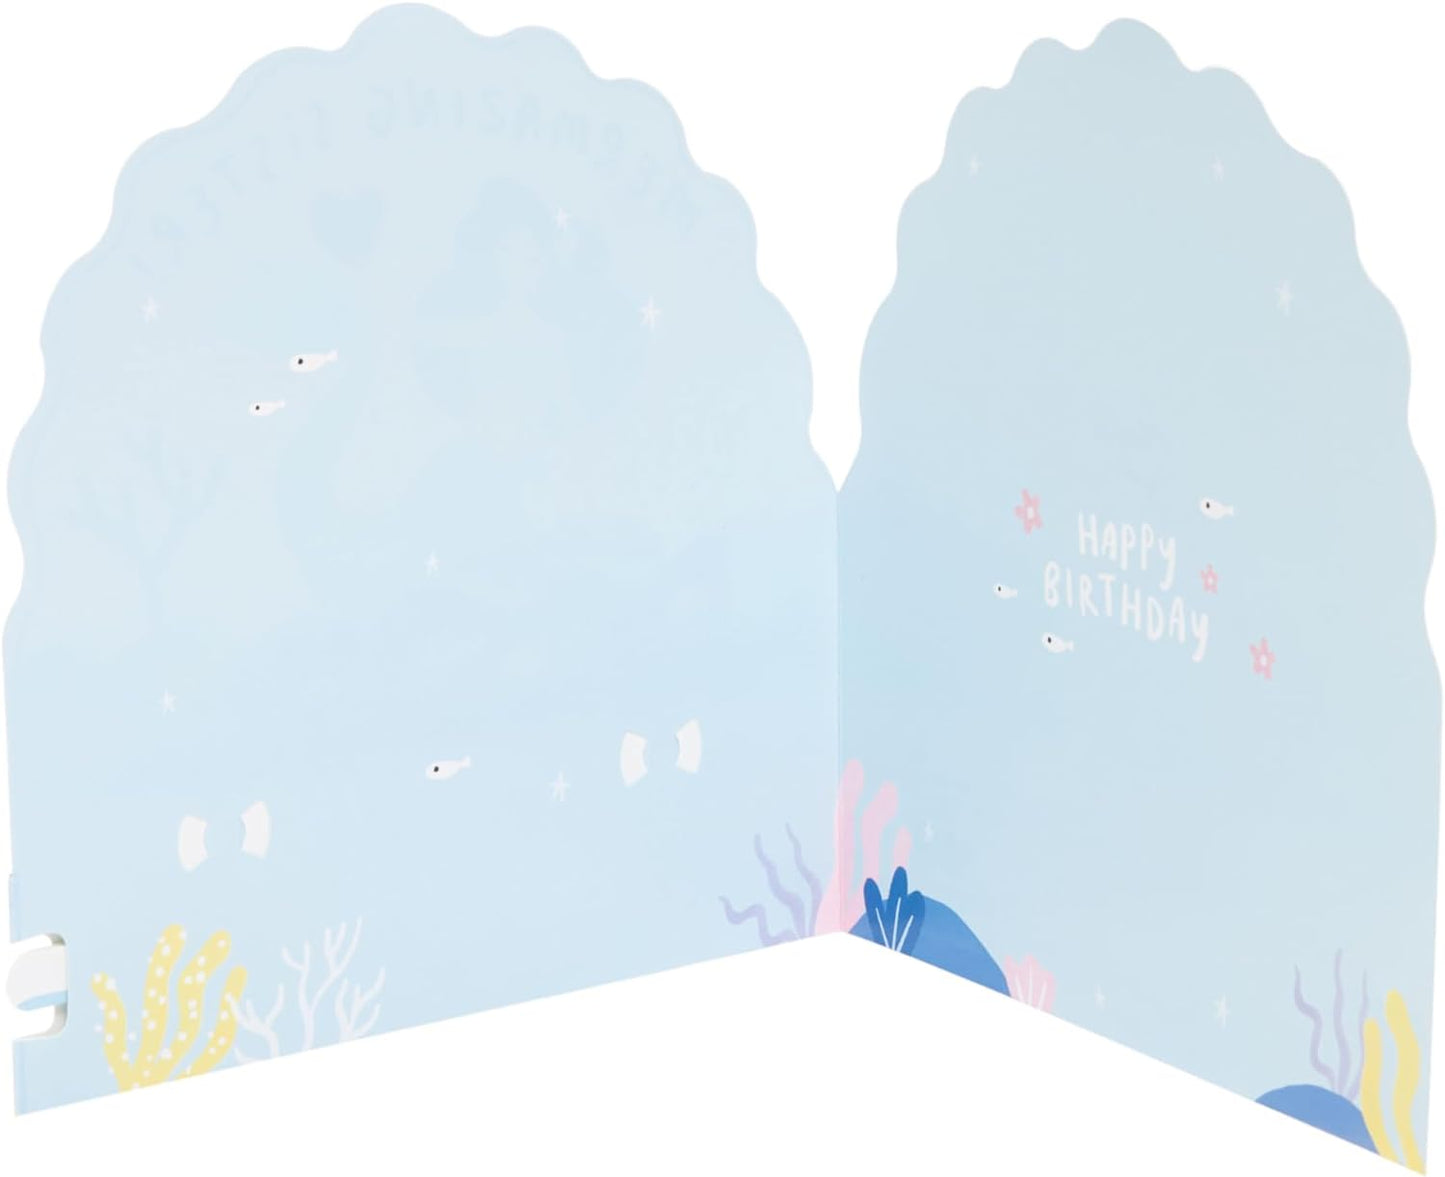 Beautiful Pop-Up Mermaid Design Sister Birthday Card